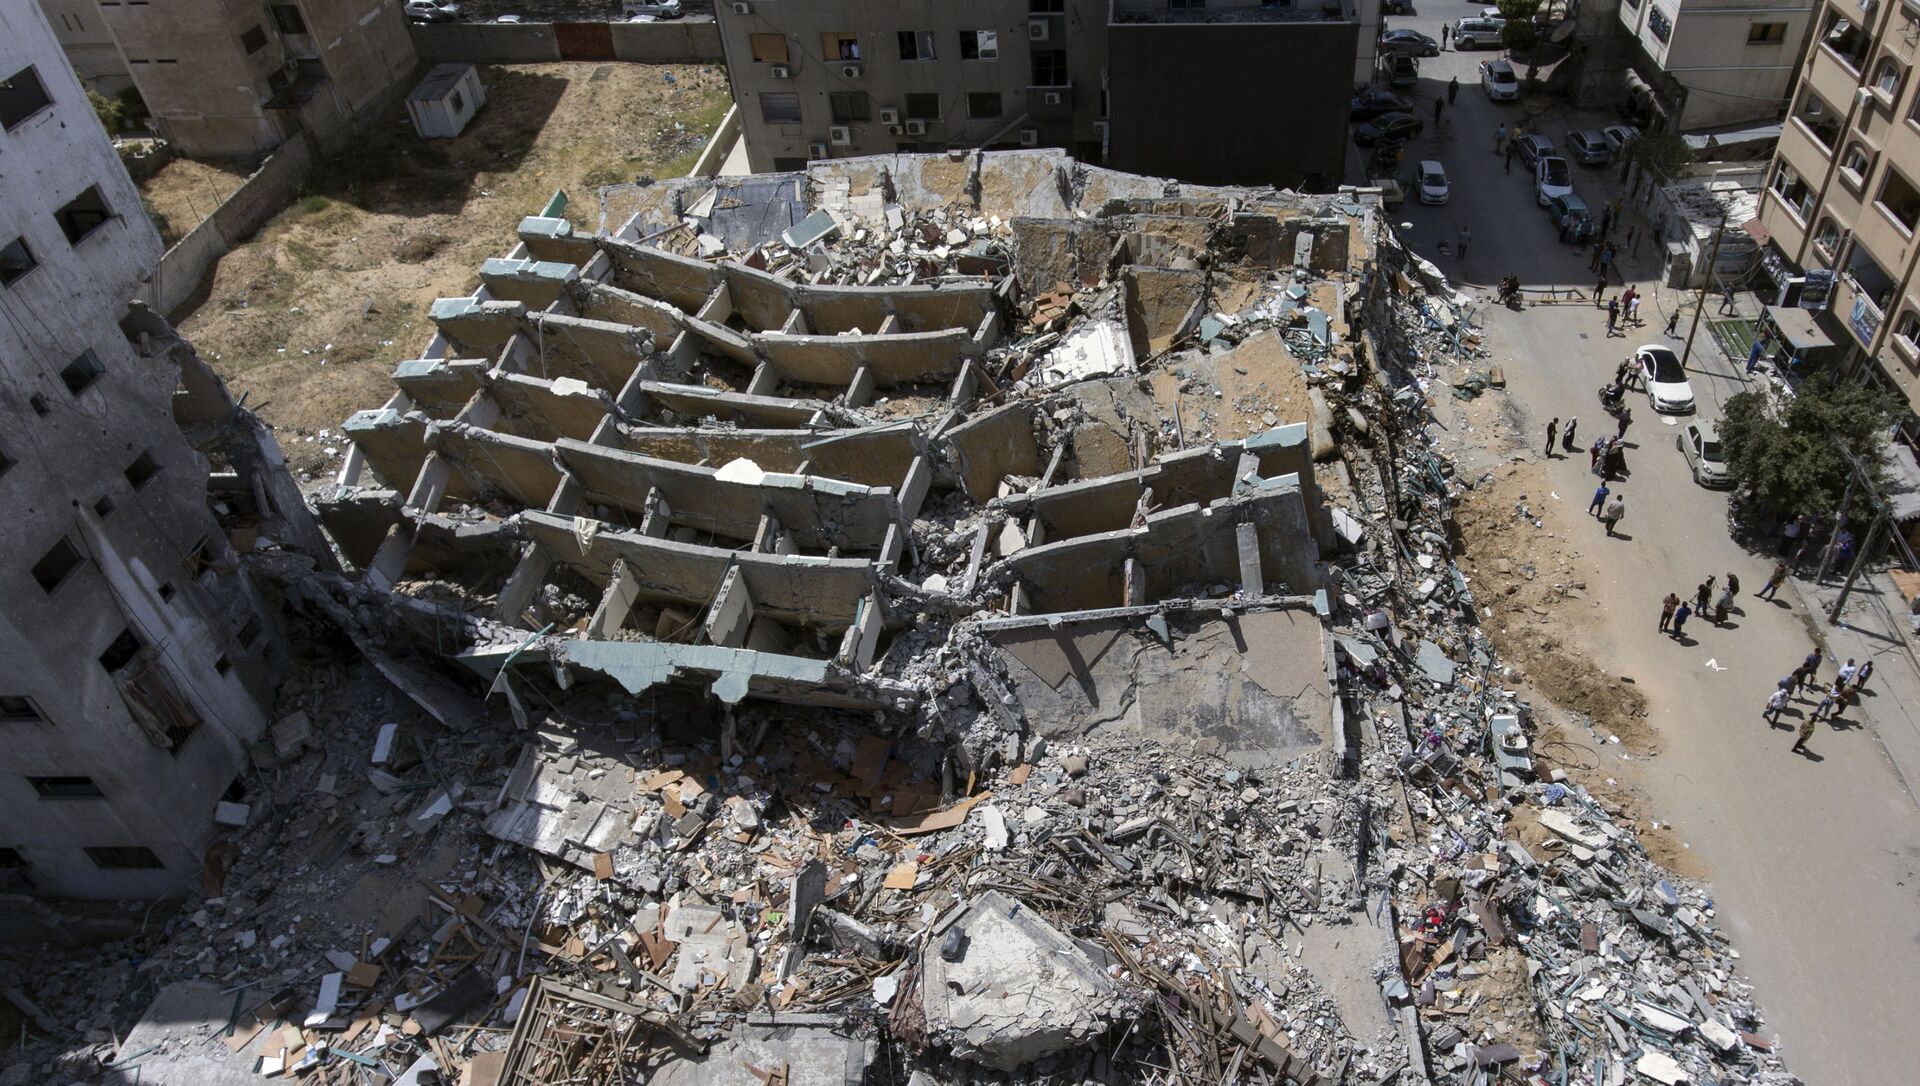 Destructions à Gaza après l'escalade des tensions avec Israël en mai 2021 - Sputnik Afrique, 1920, 18.06.2021